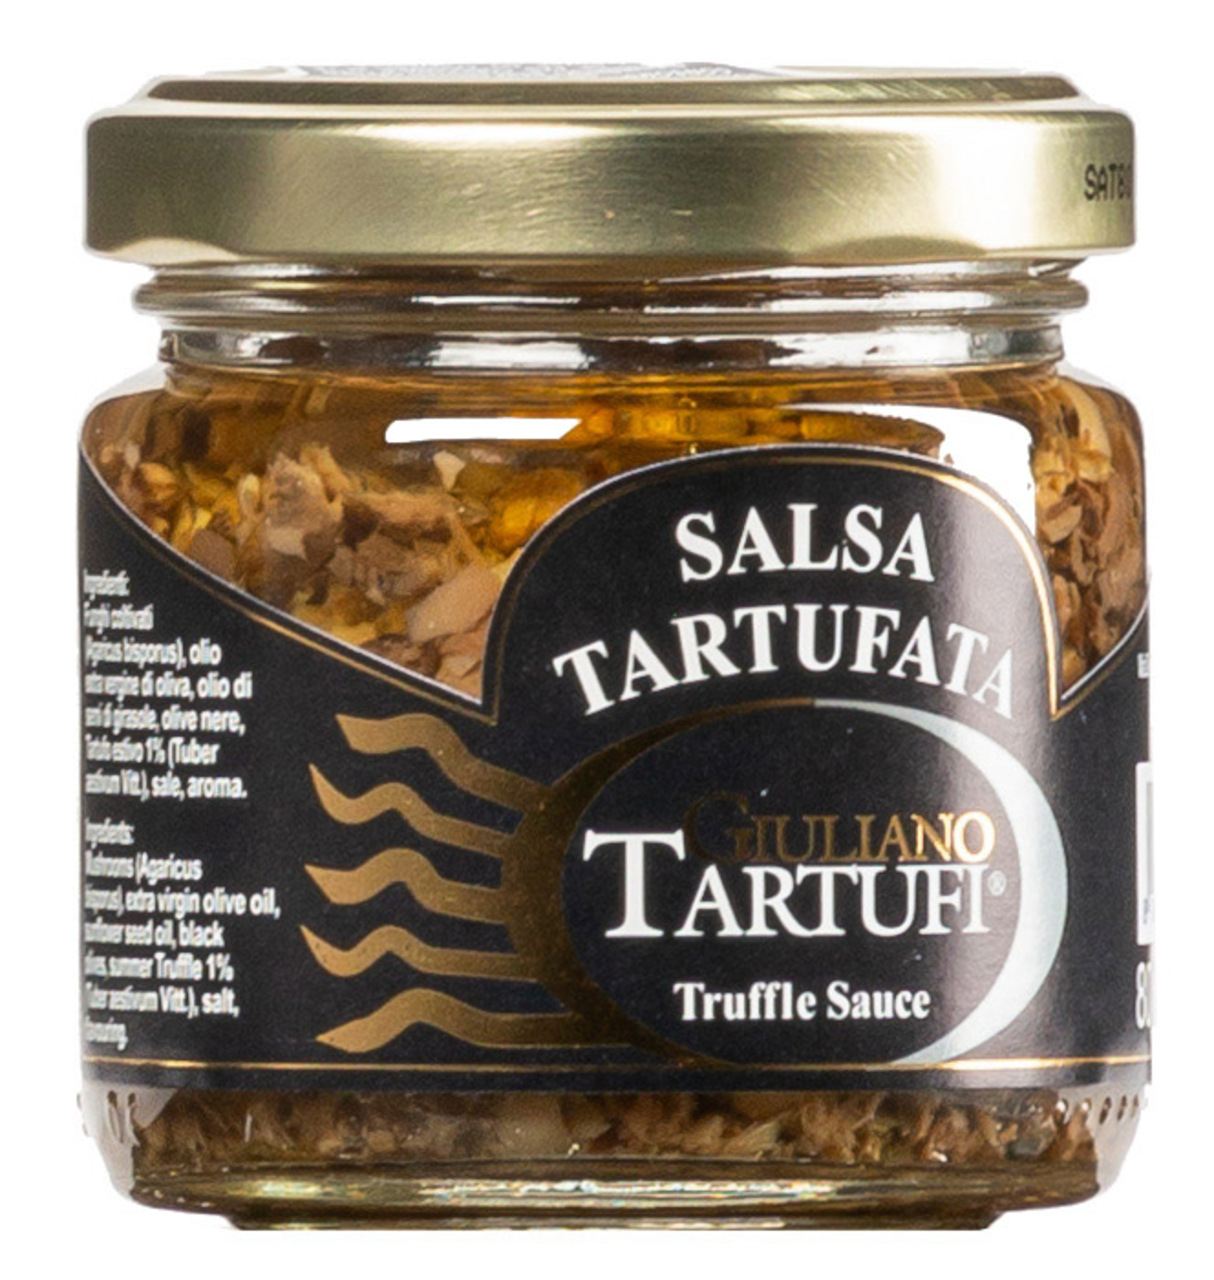 Salsa tartufata (Trüffelcreme)